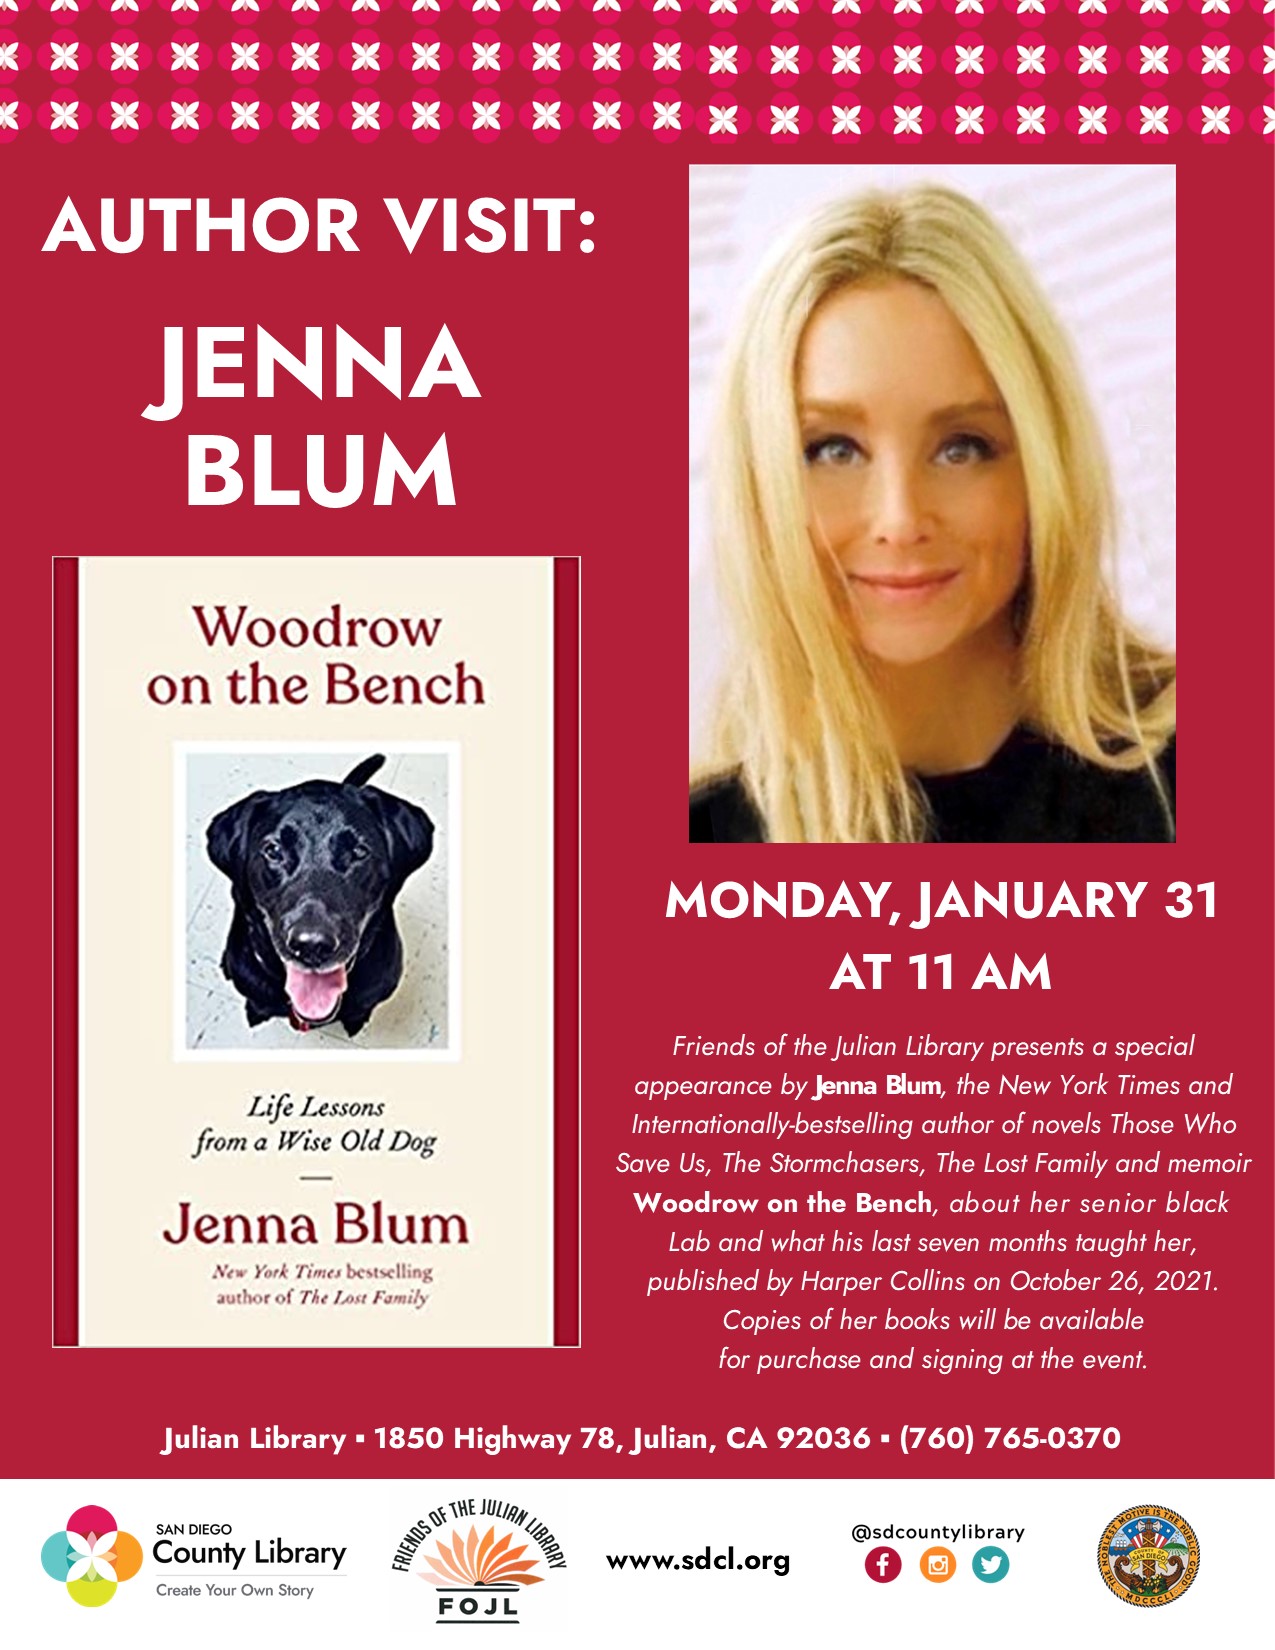 Author Jenna Blum visits the Julian Library Photo